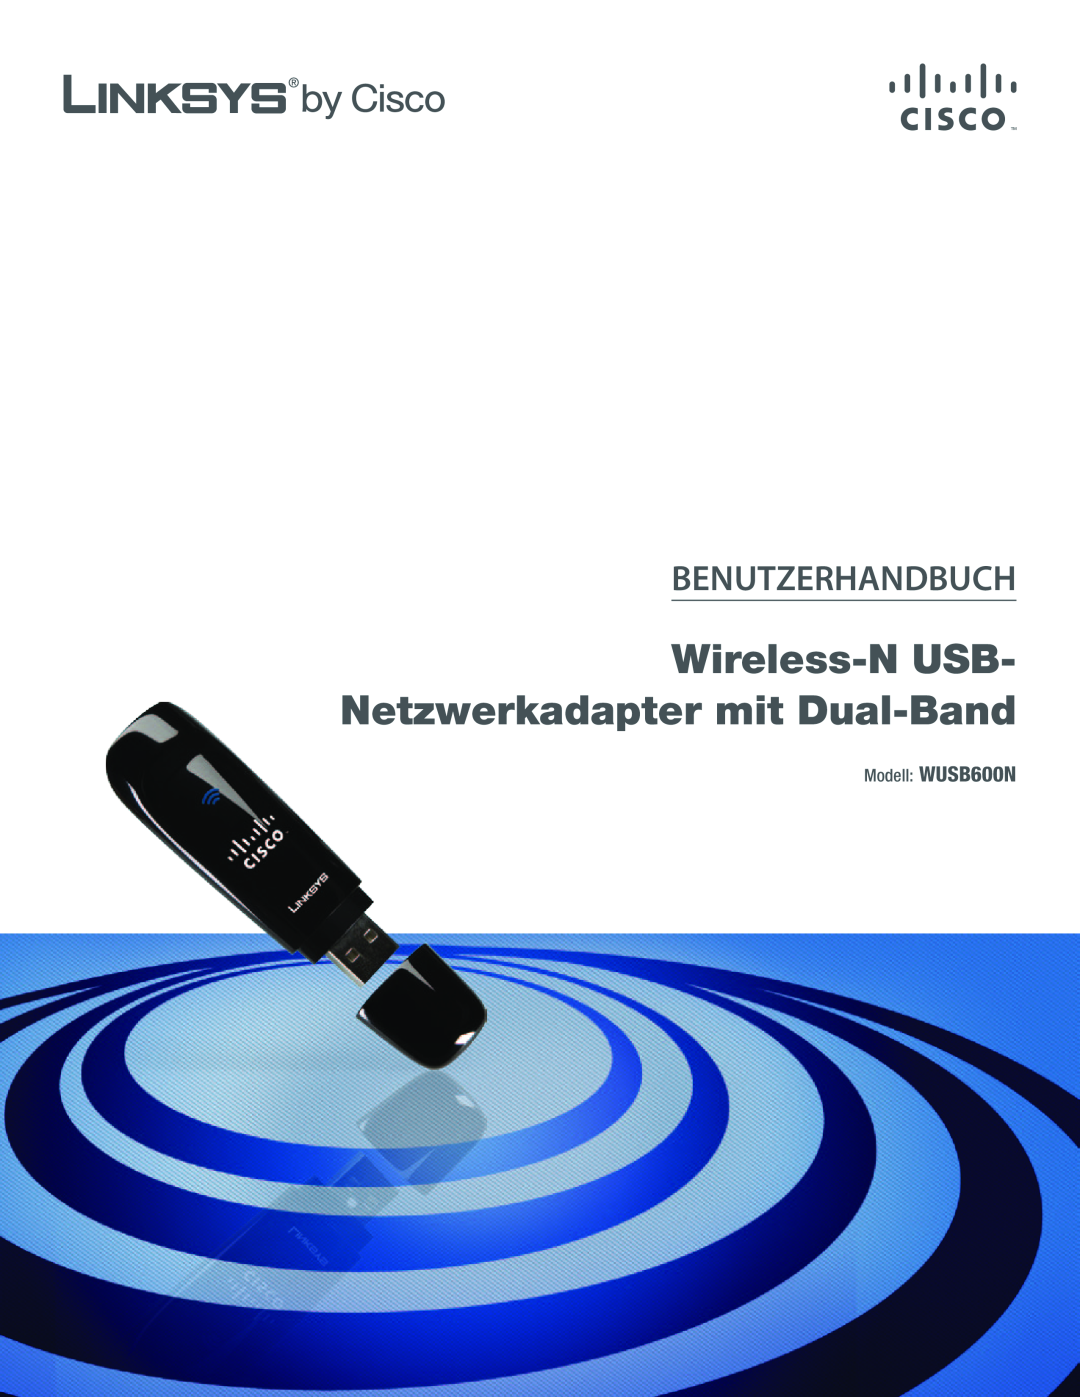 Cisco Systems manual Wireless-N USB- Netzwerkadapter mit Dual-Band, Benutzerhandbuch, Modell WUSB600N 